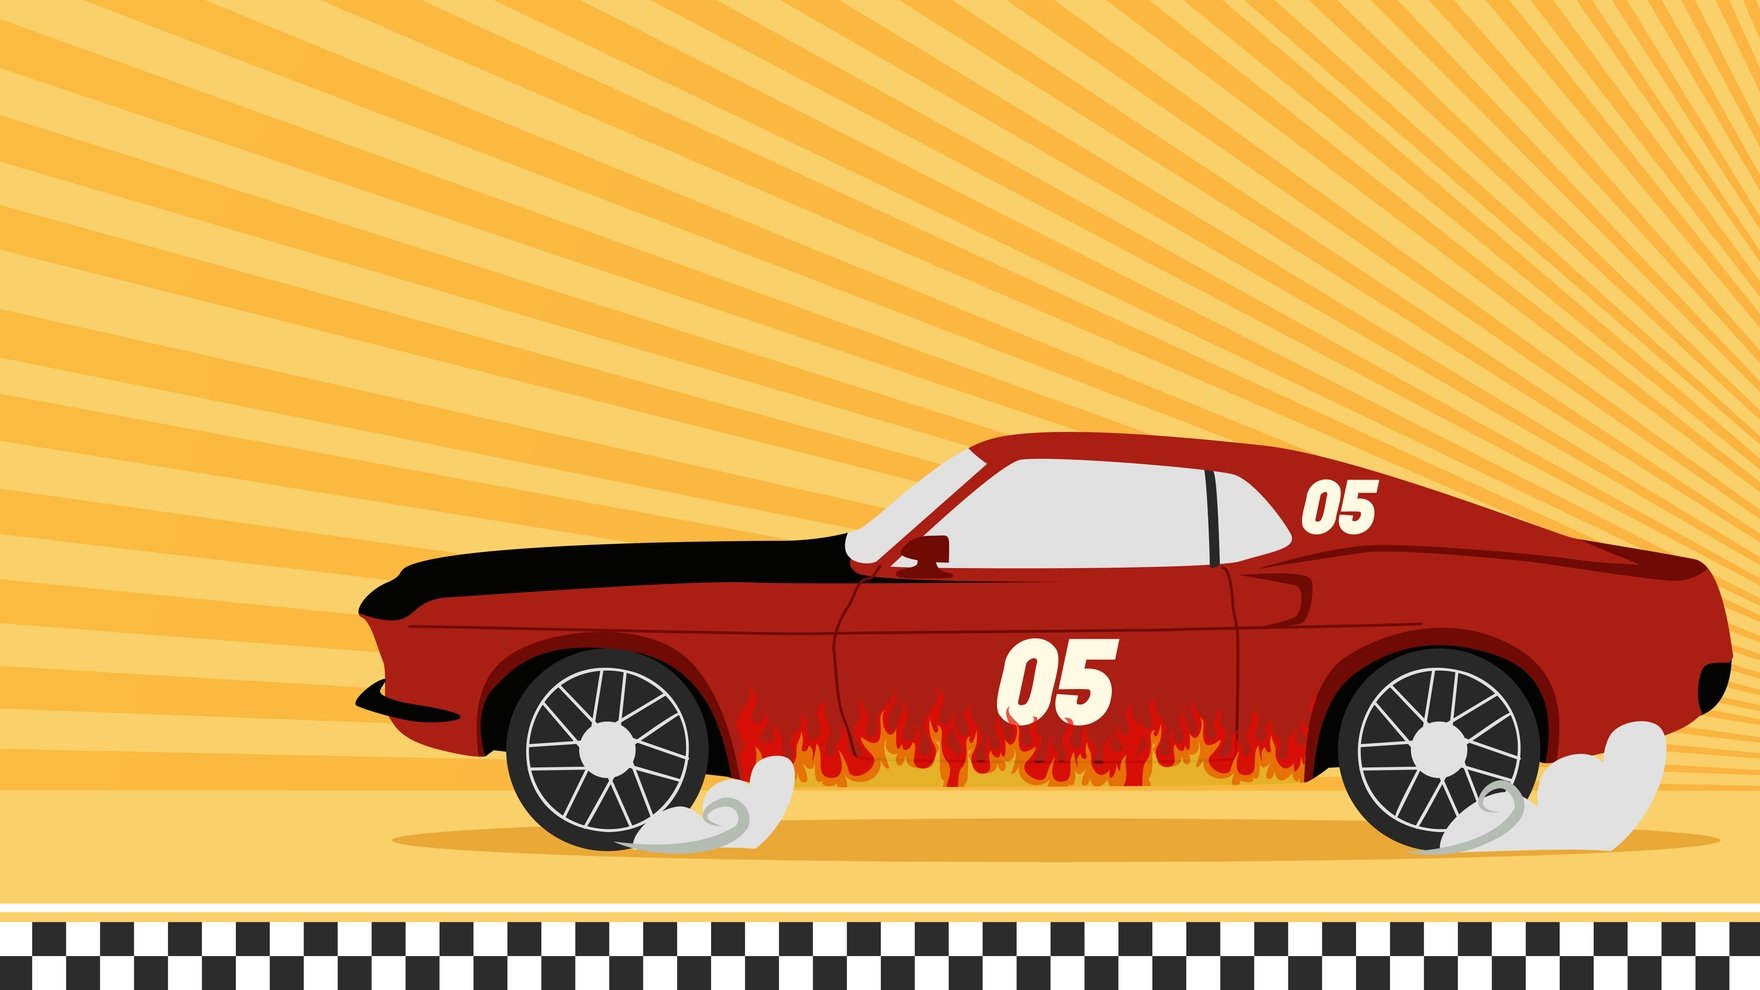 Free Car Racing Background in Illustrator, EPS, SVG, JPG, PNG